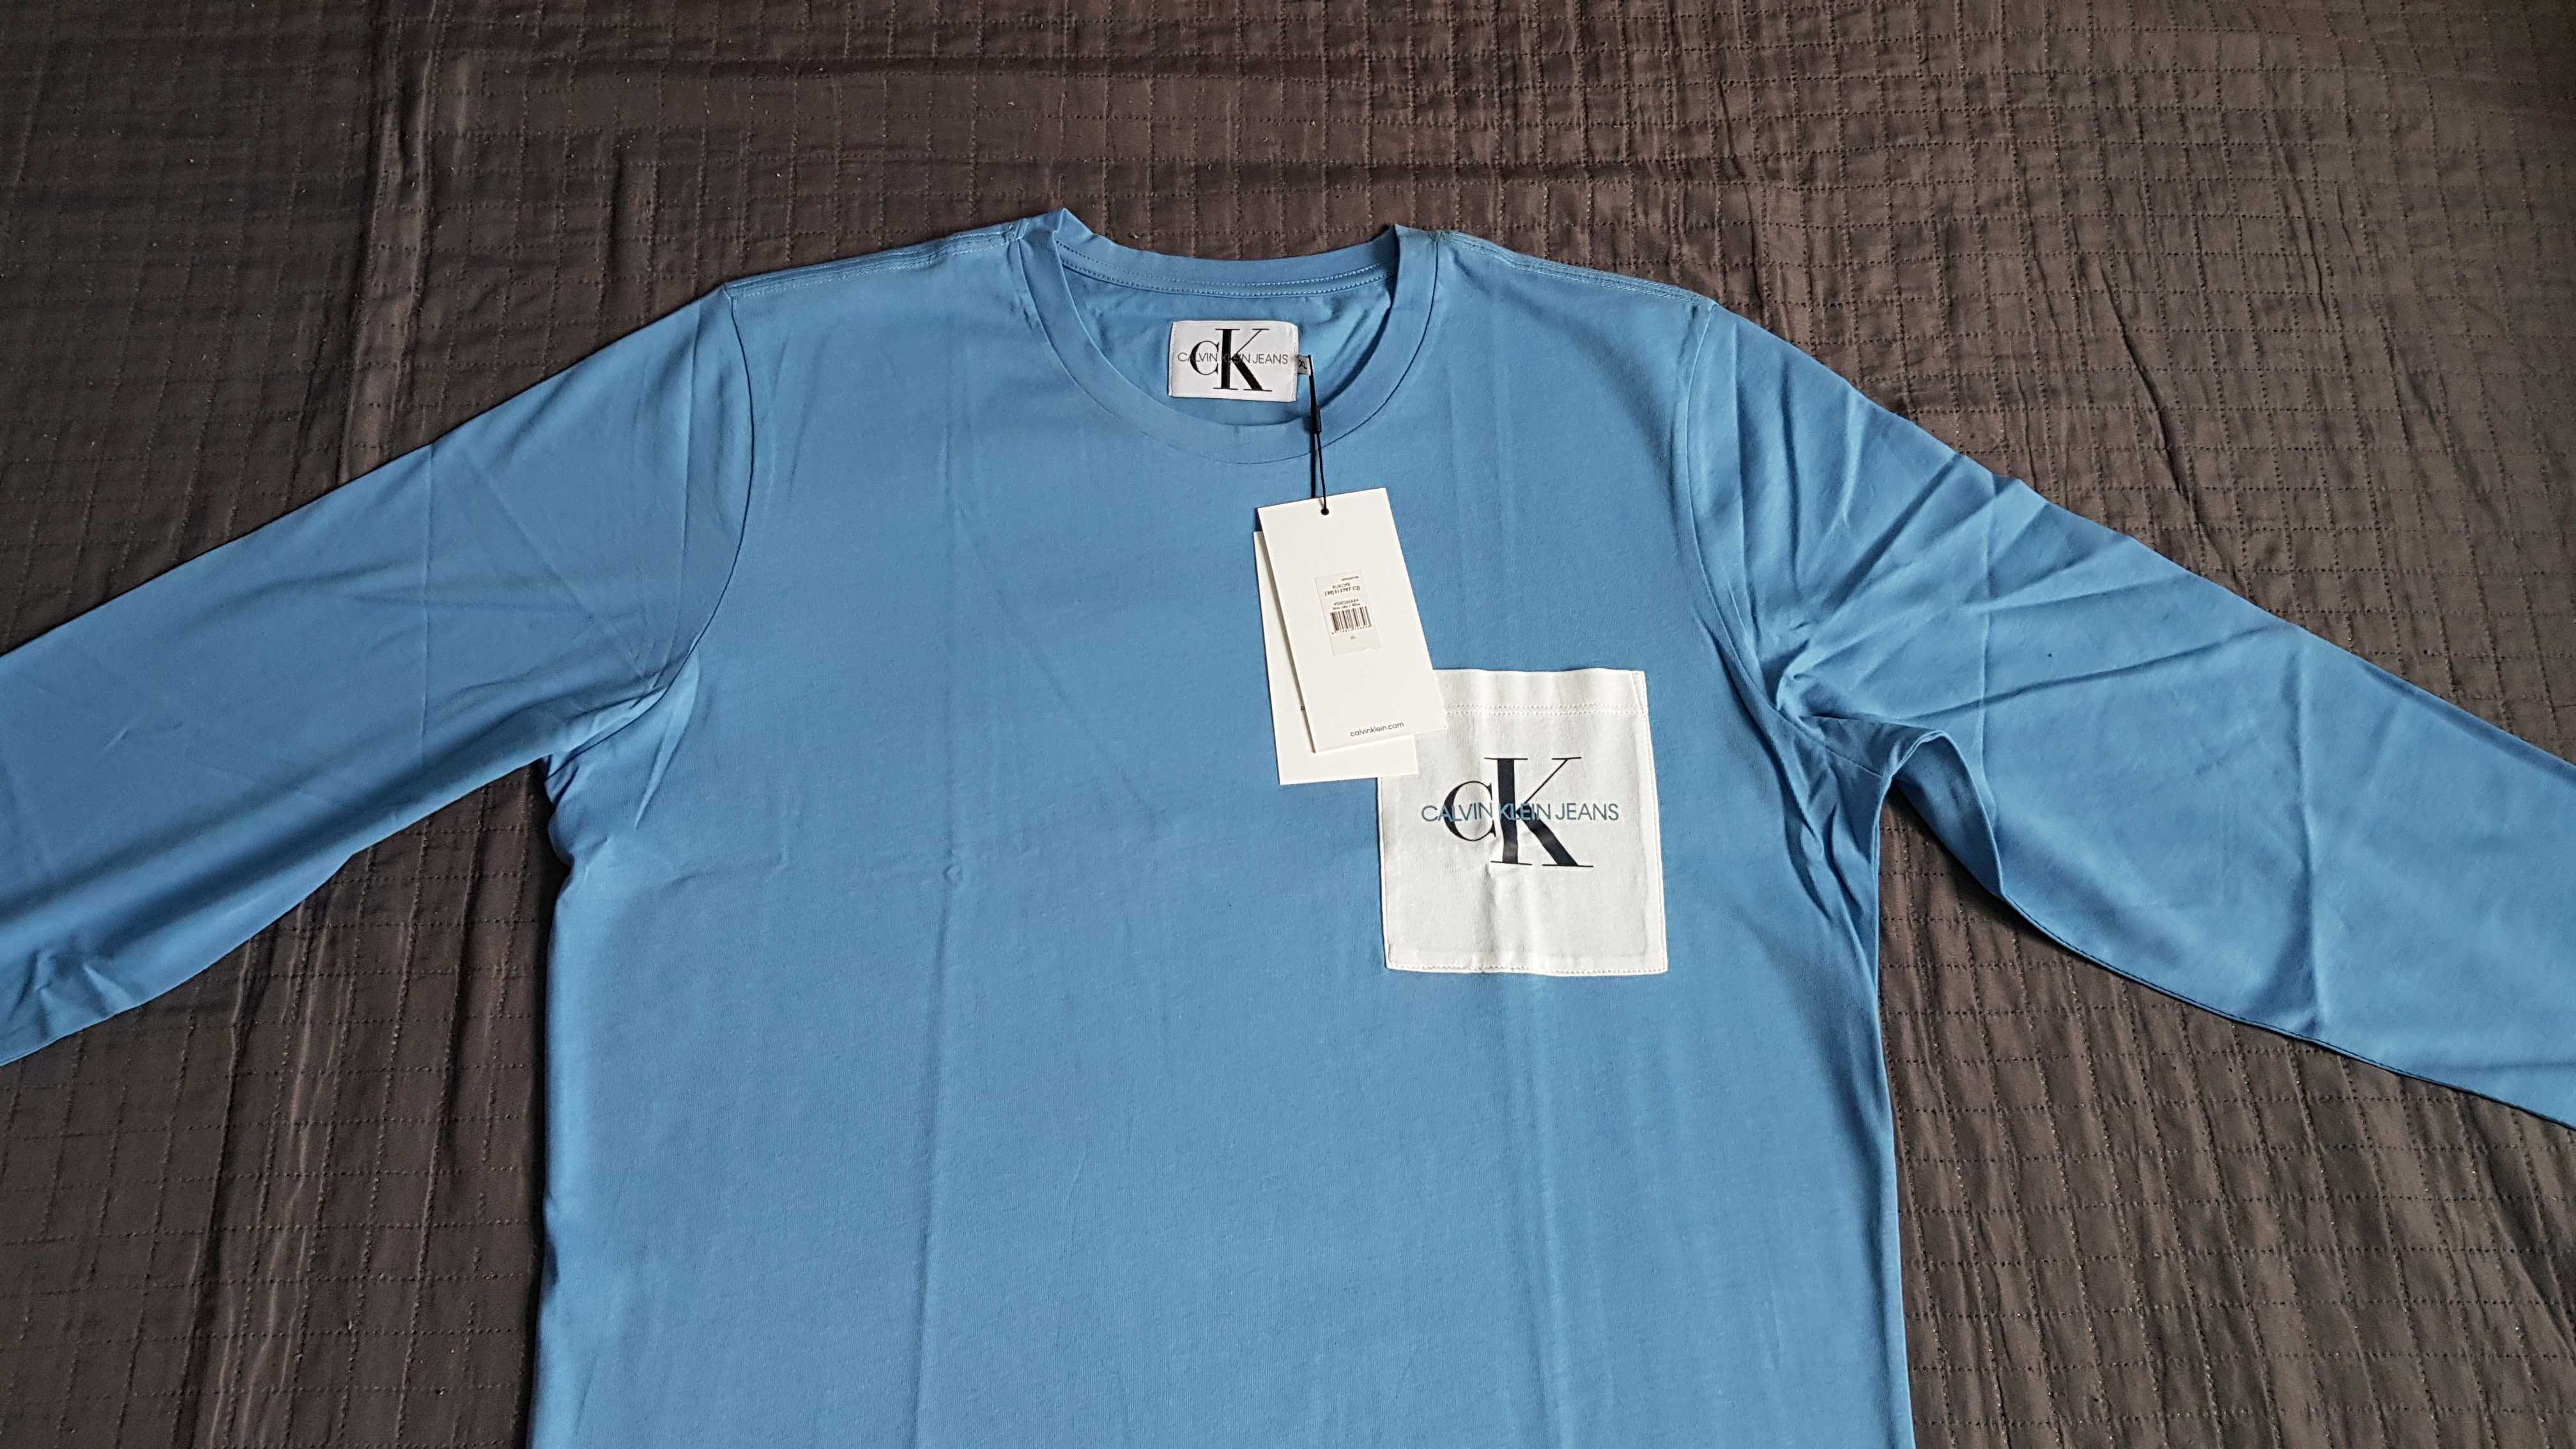 CK Calvin Klein Jeans XL longsleeve nowy z metkami w folii błękit